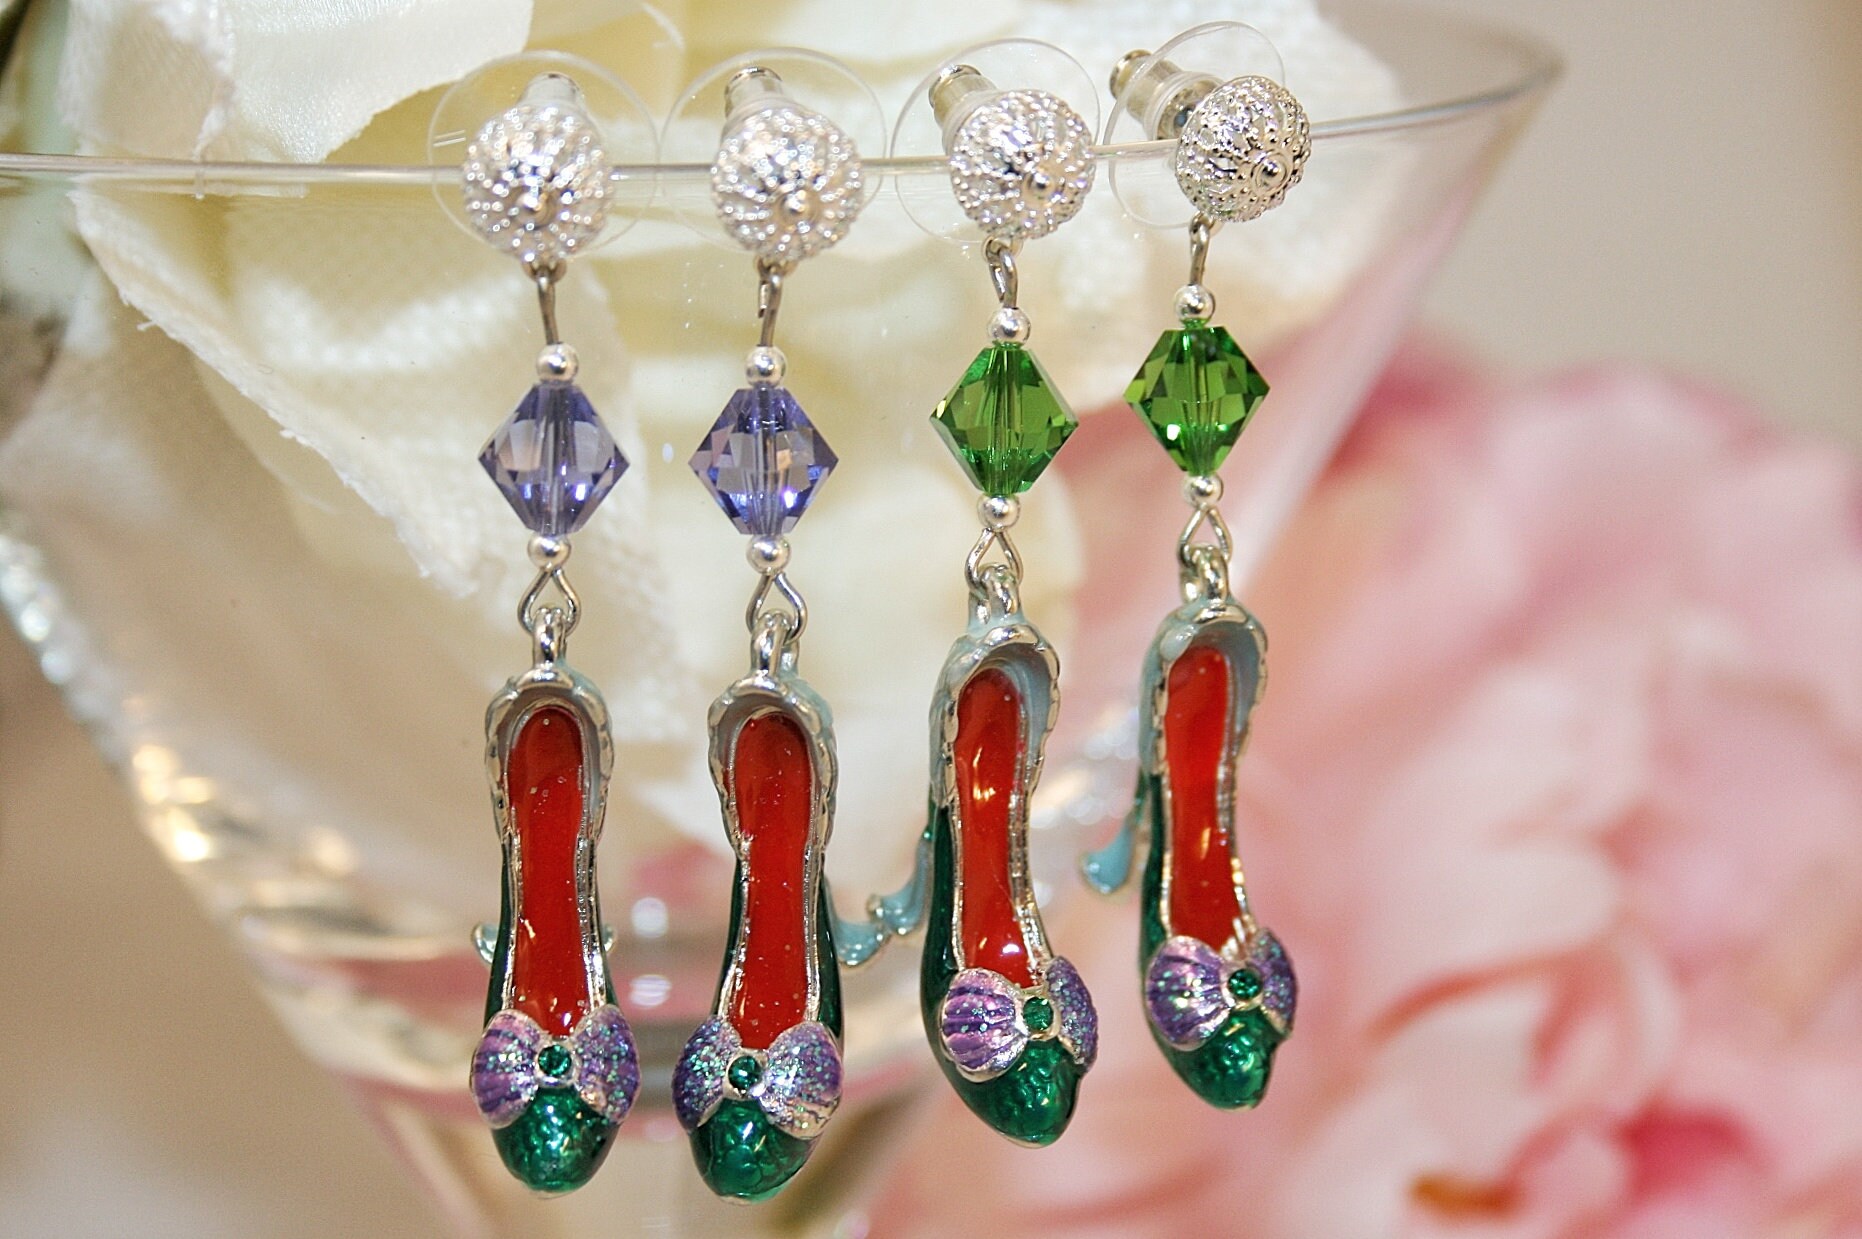 Valentines Gift Sterling Silver dangle earrings Gemstone hearts Valerie Sweet Heart earrings